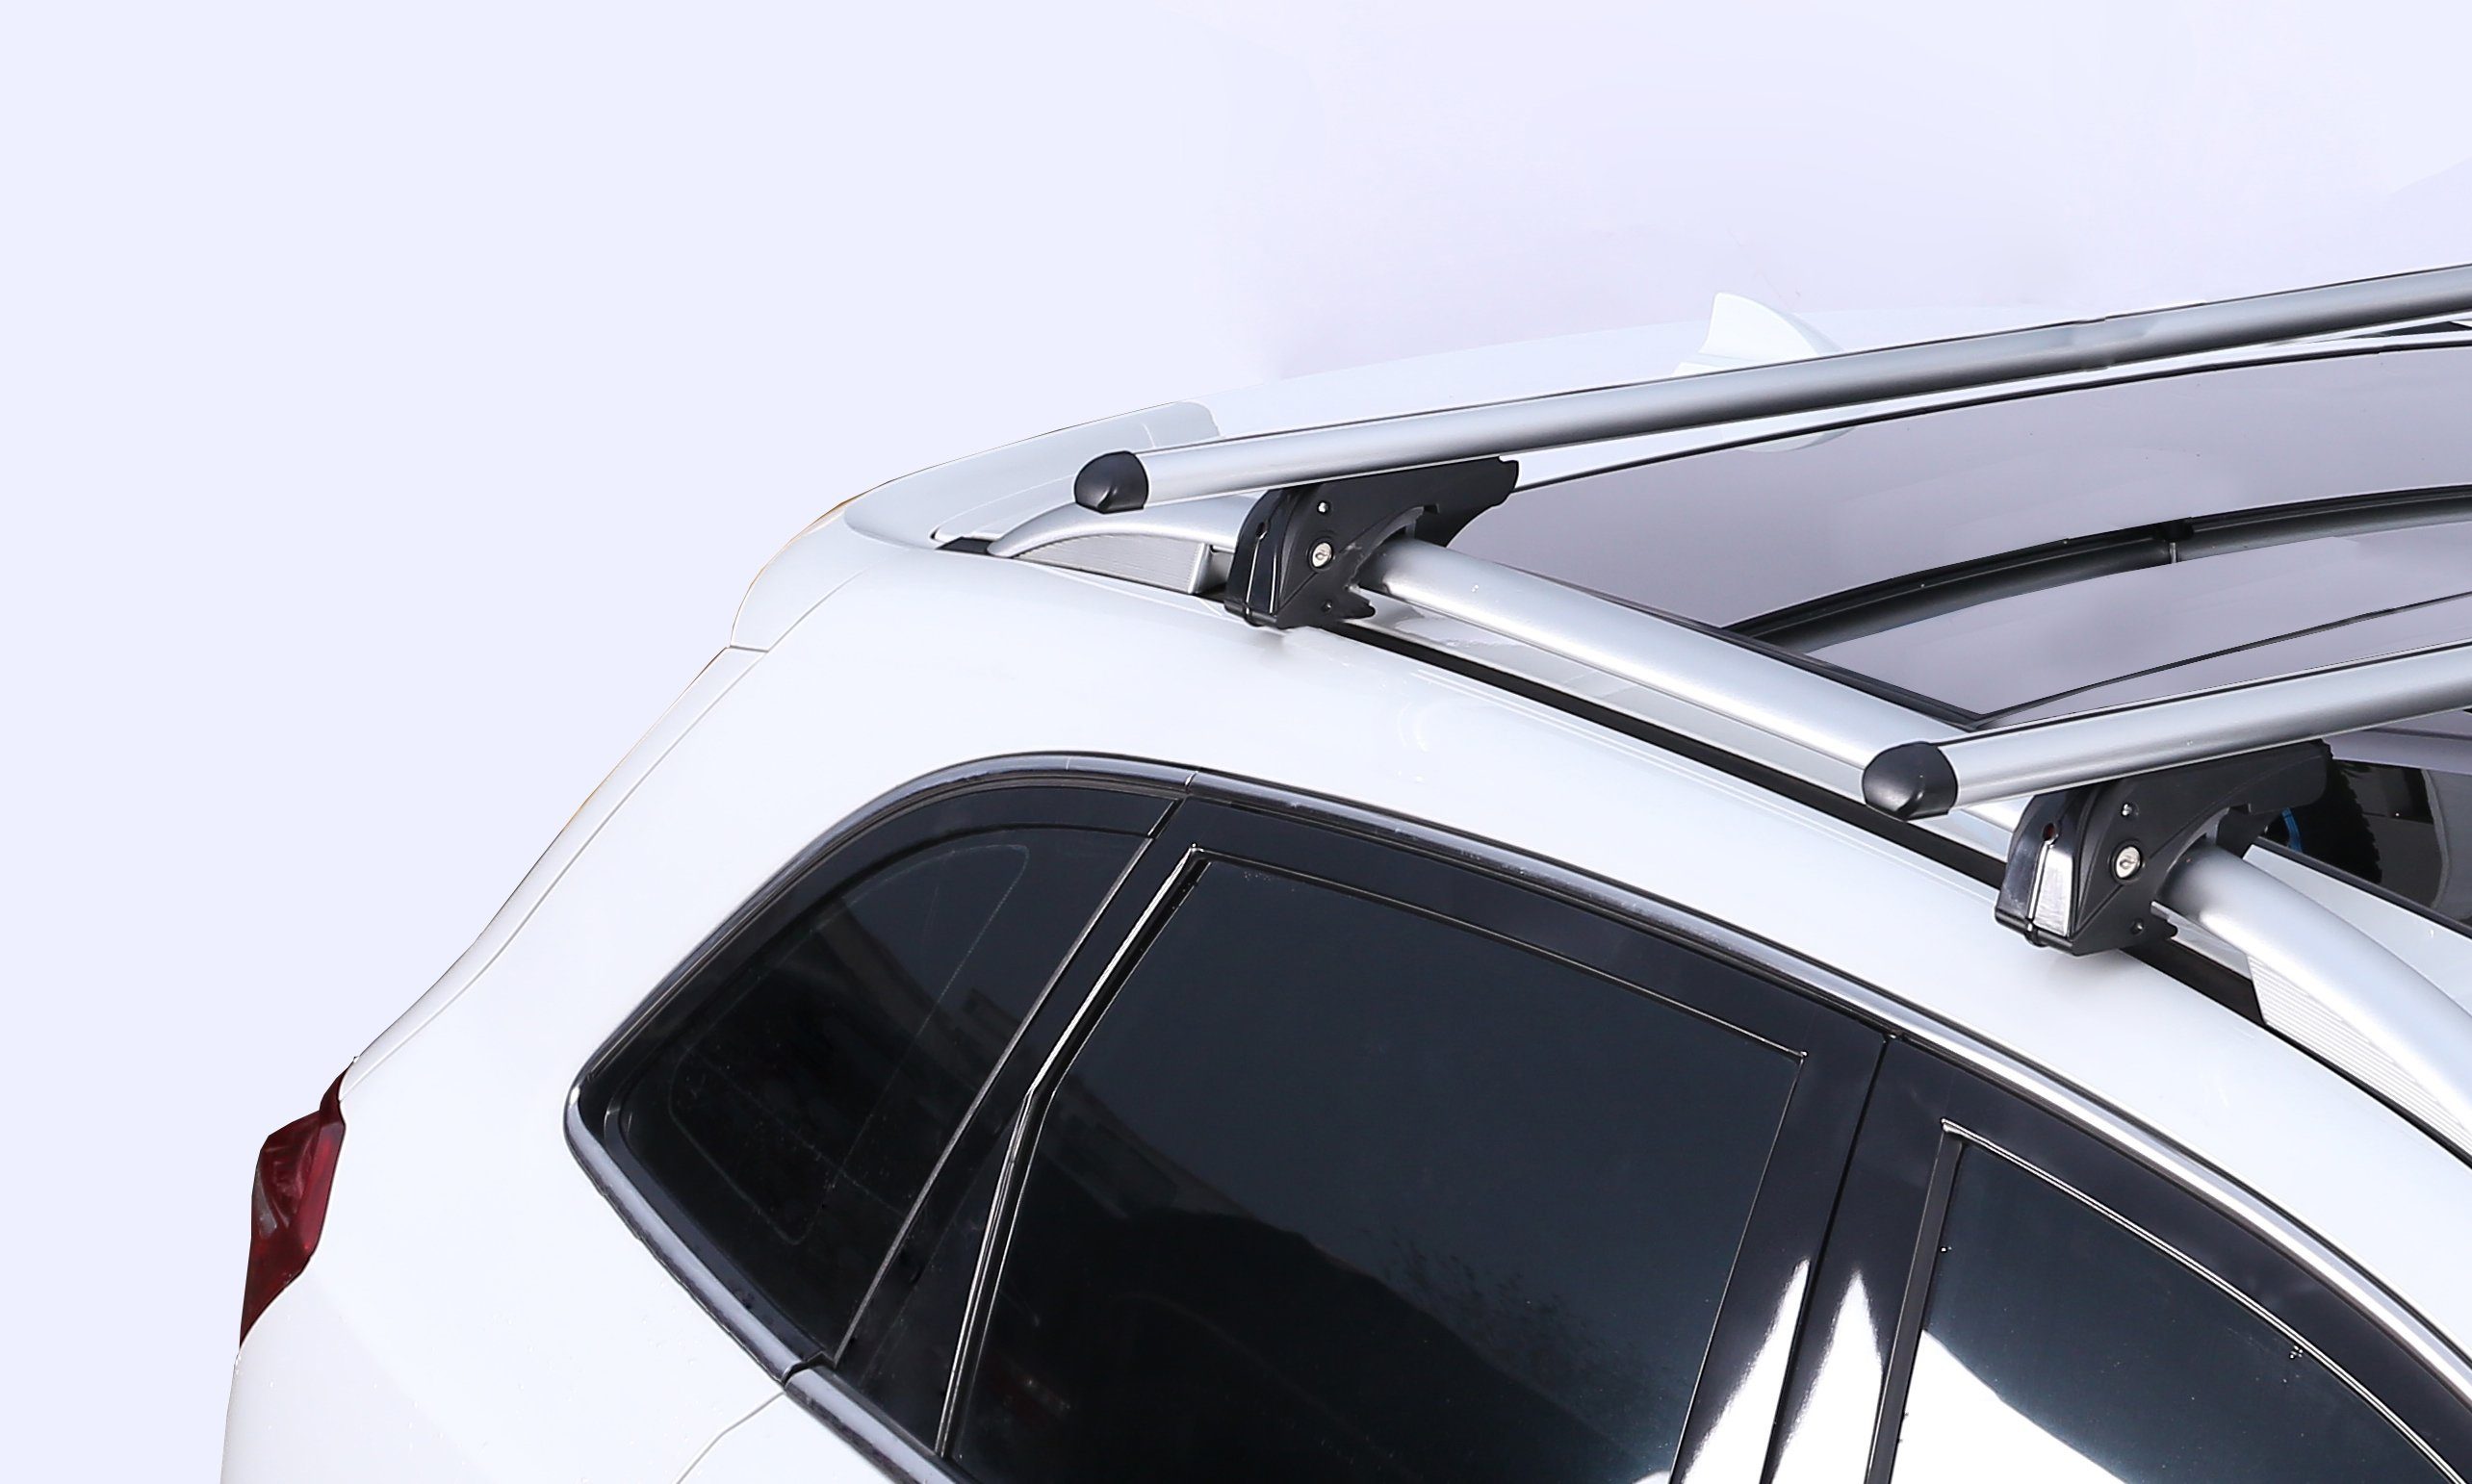 VDP Dachbox, (Für Türer) Dachträger kompatibel (A) 00-07, Set), Dachträger/Relingträger CUBE470 (5 Agila (A) Opel Vauxhall Dachbox/Gepäckbox Ihren + VDPLION2 Dachbox Türer) und 00-07 Opel (5 mit / Agila im